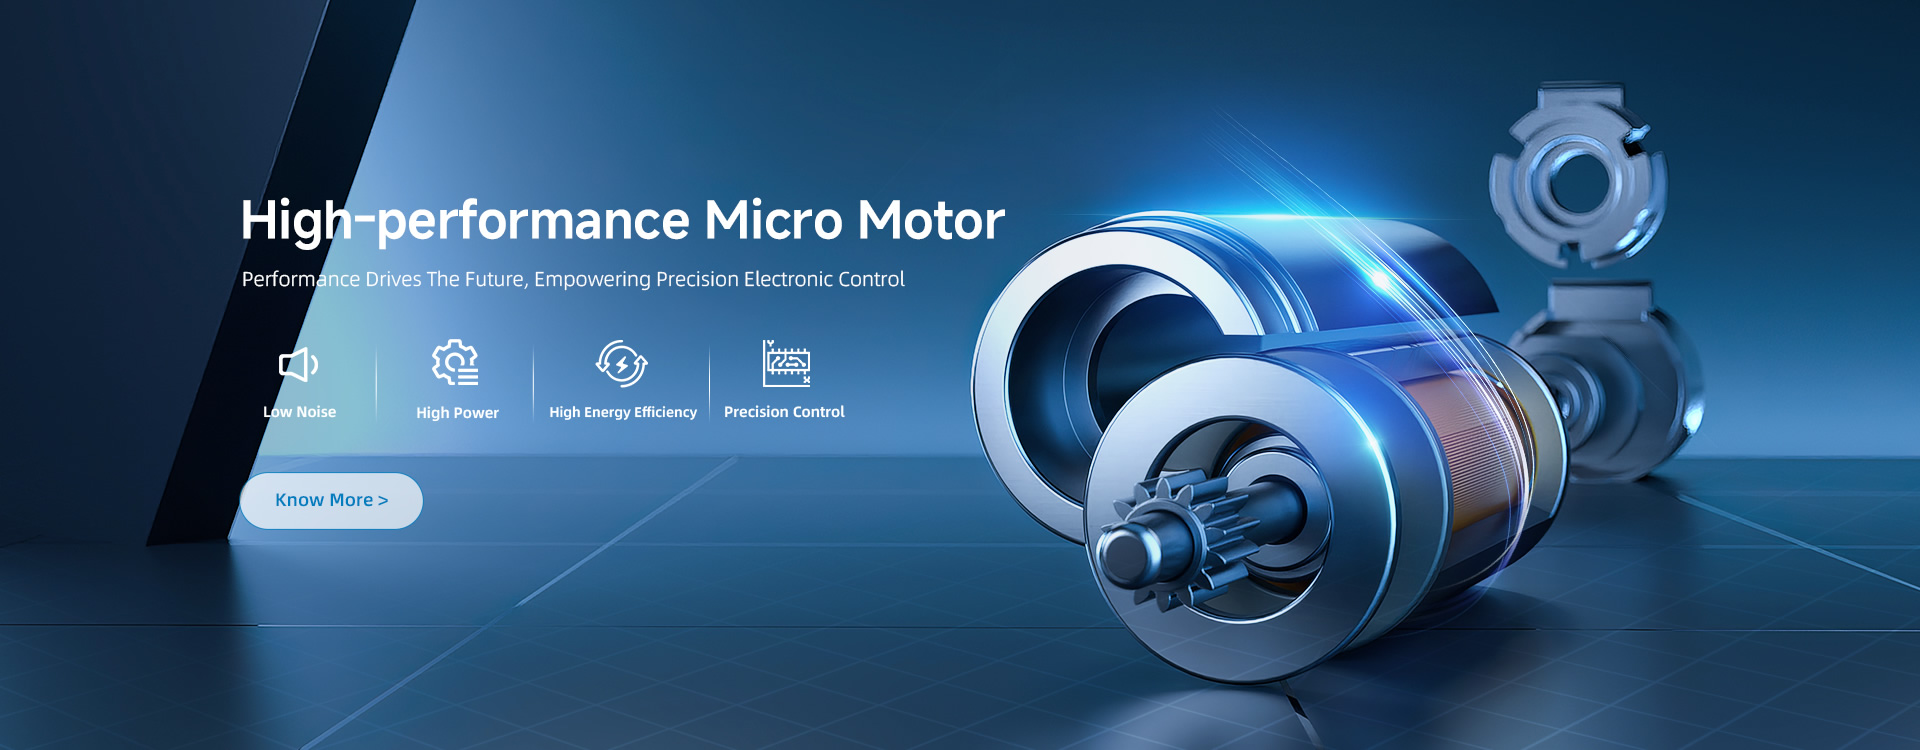 High-performance Mocro Motor